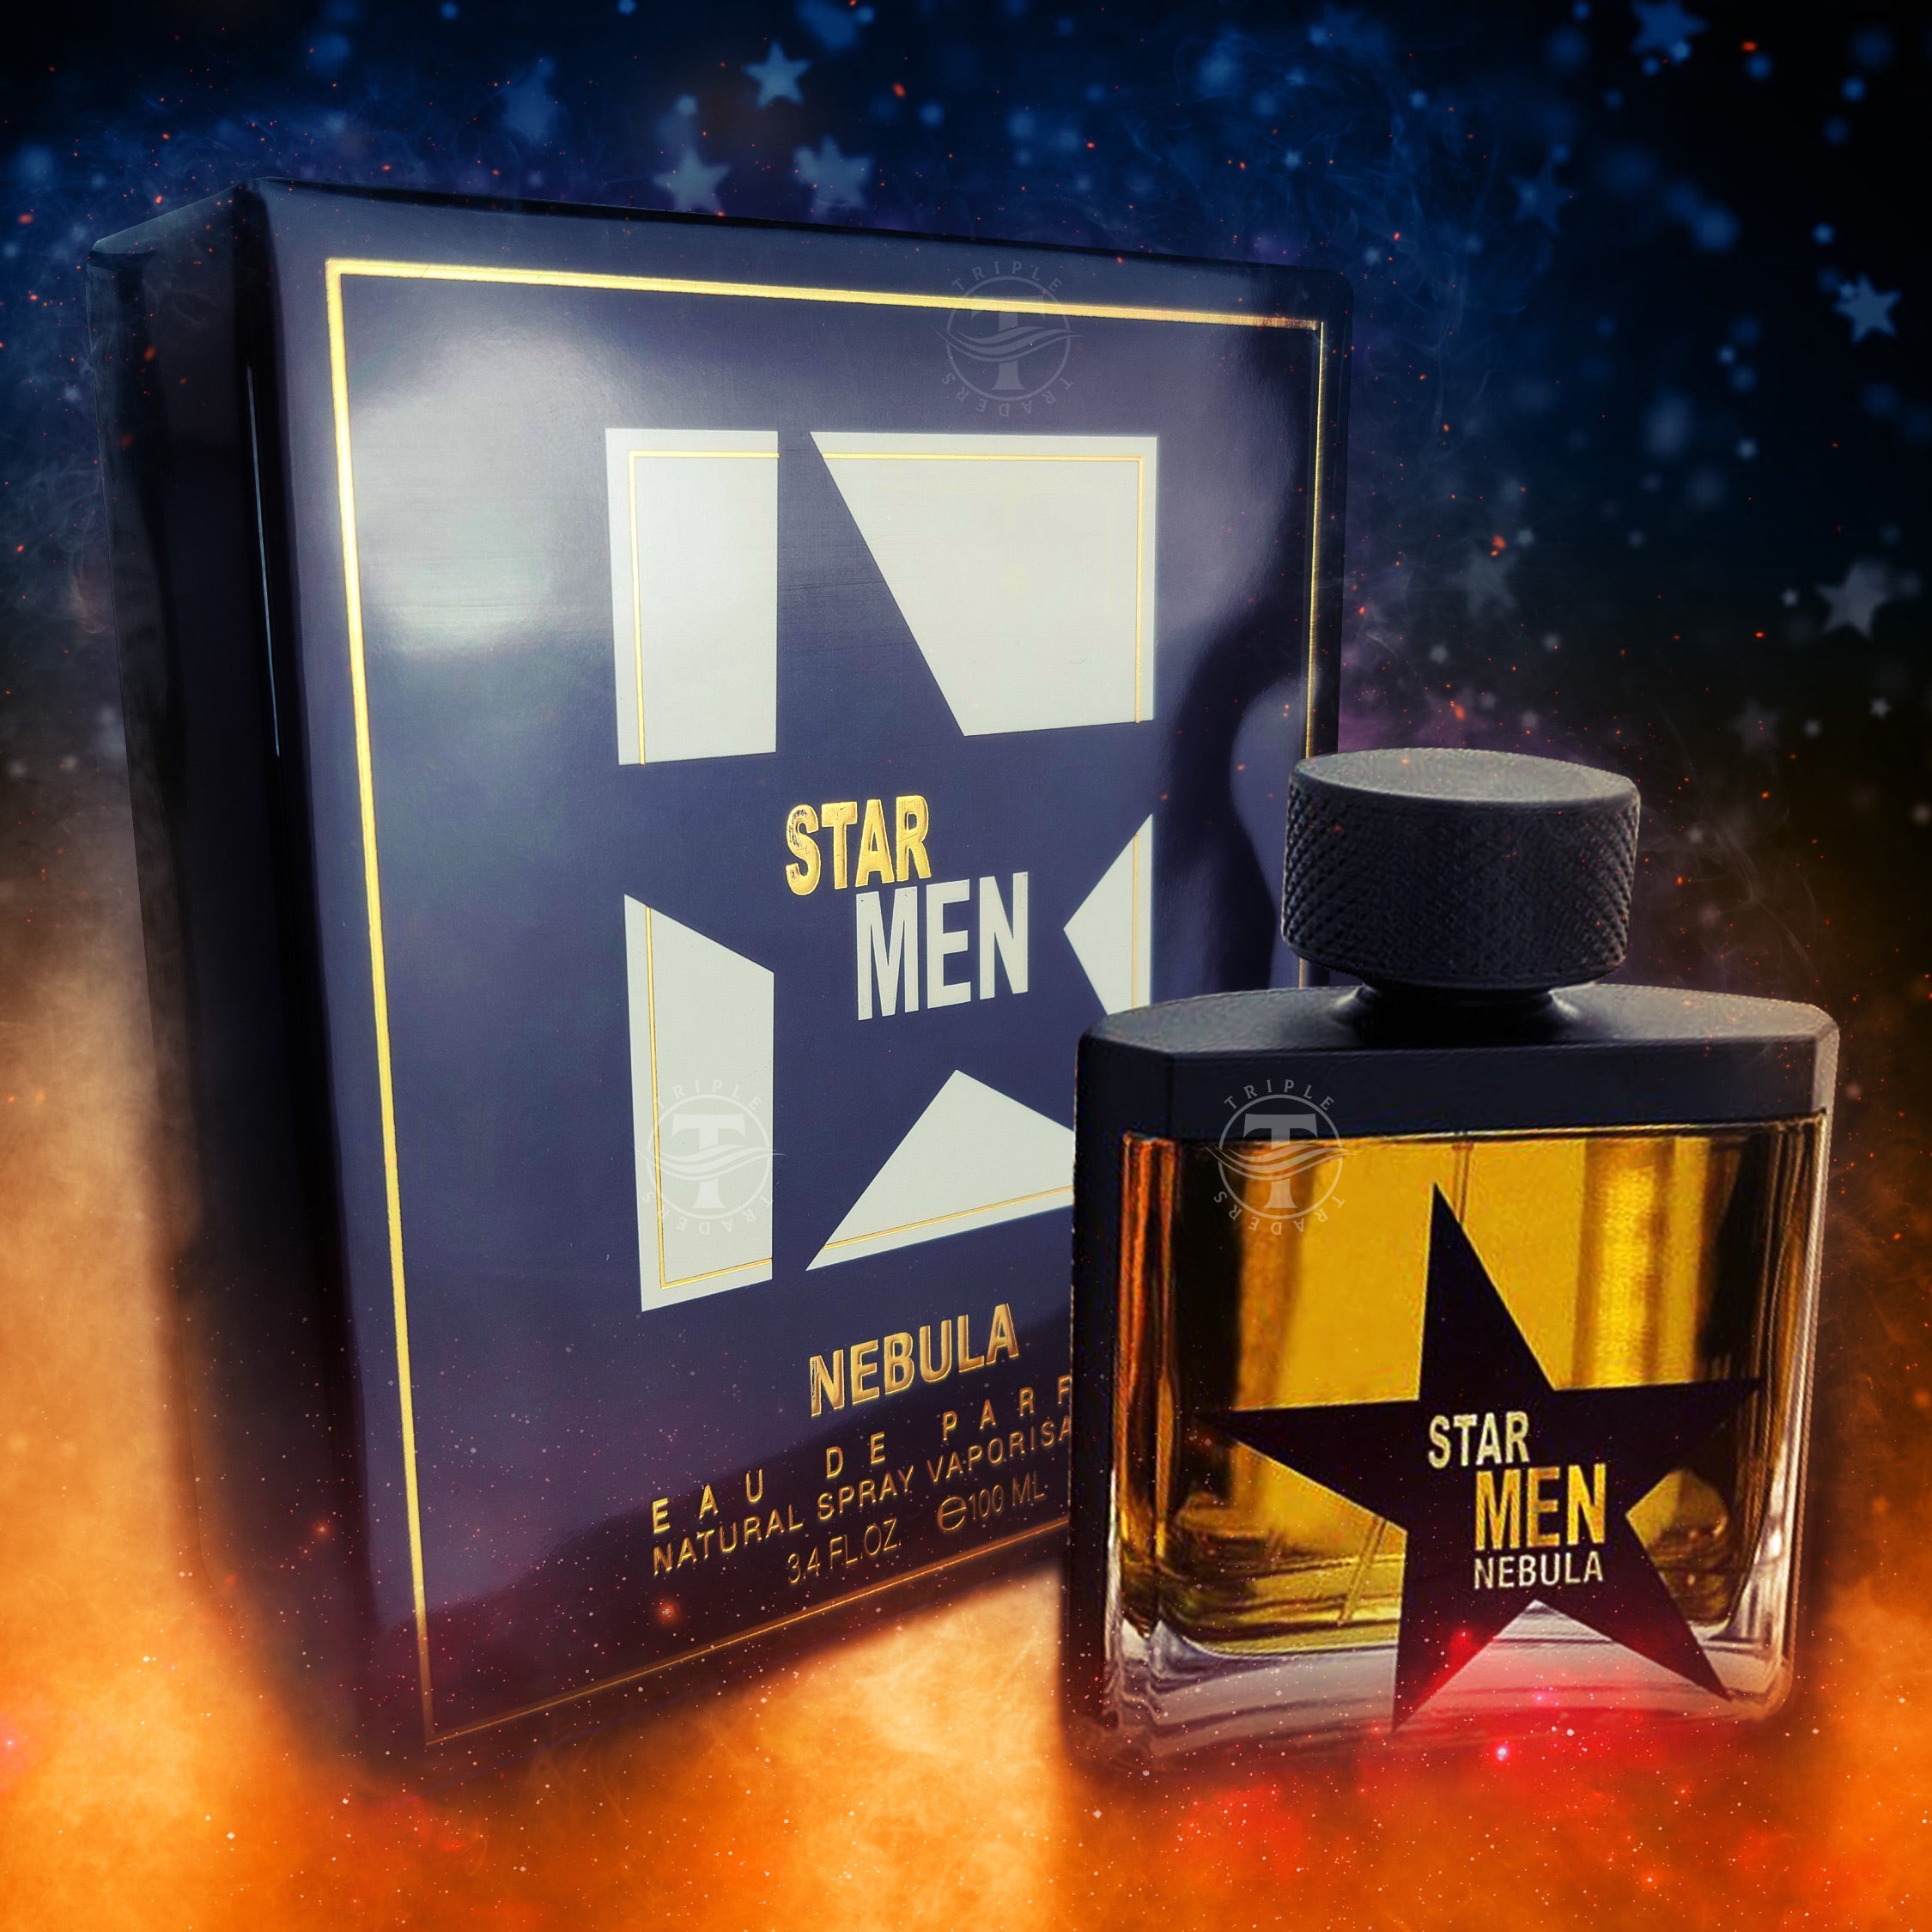 Star Men Nebula by Fragrance World 3.4 oz Eau de Parfum Spray for Men.